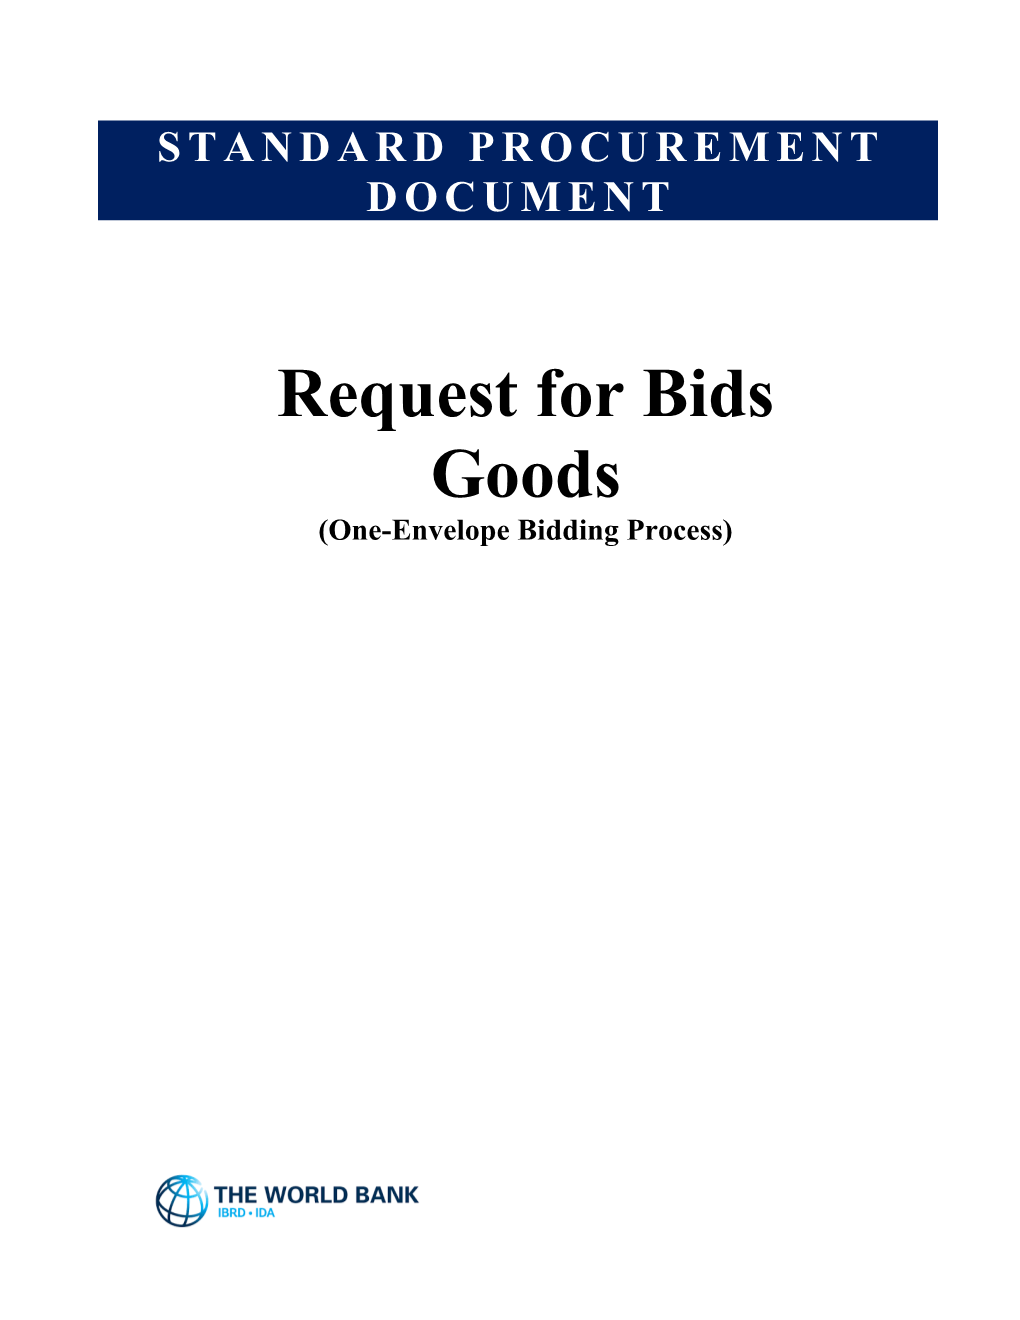 Standard Bidding Documents s1